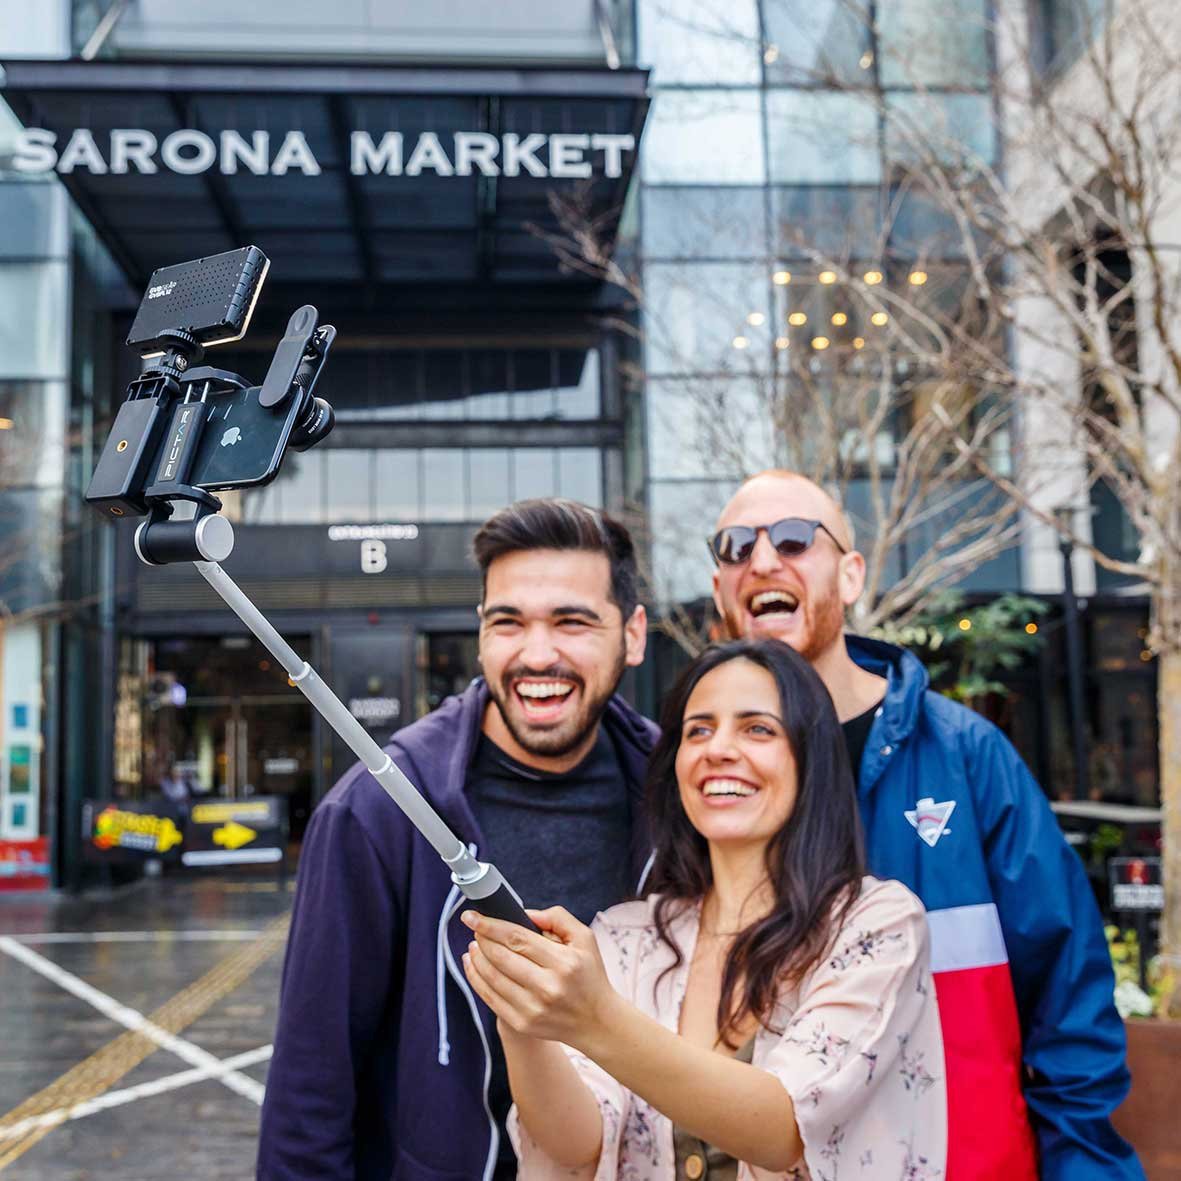 Miggo Pictar Smart Selfie Stick